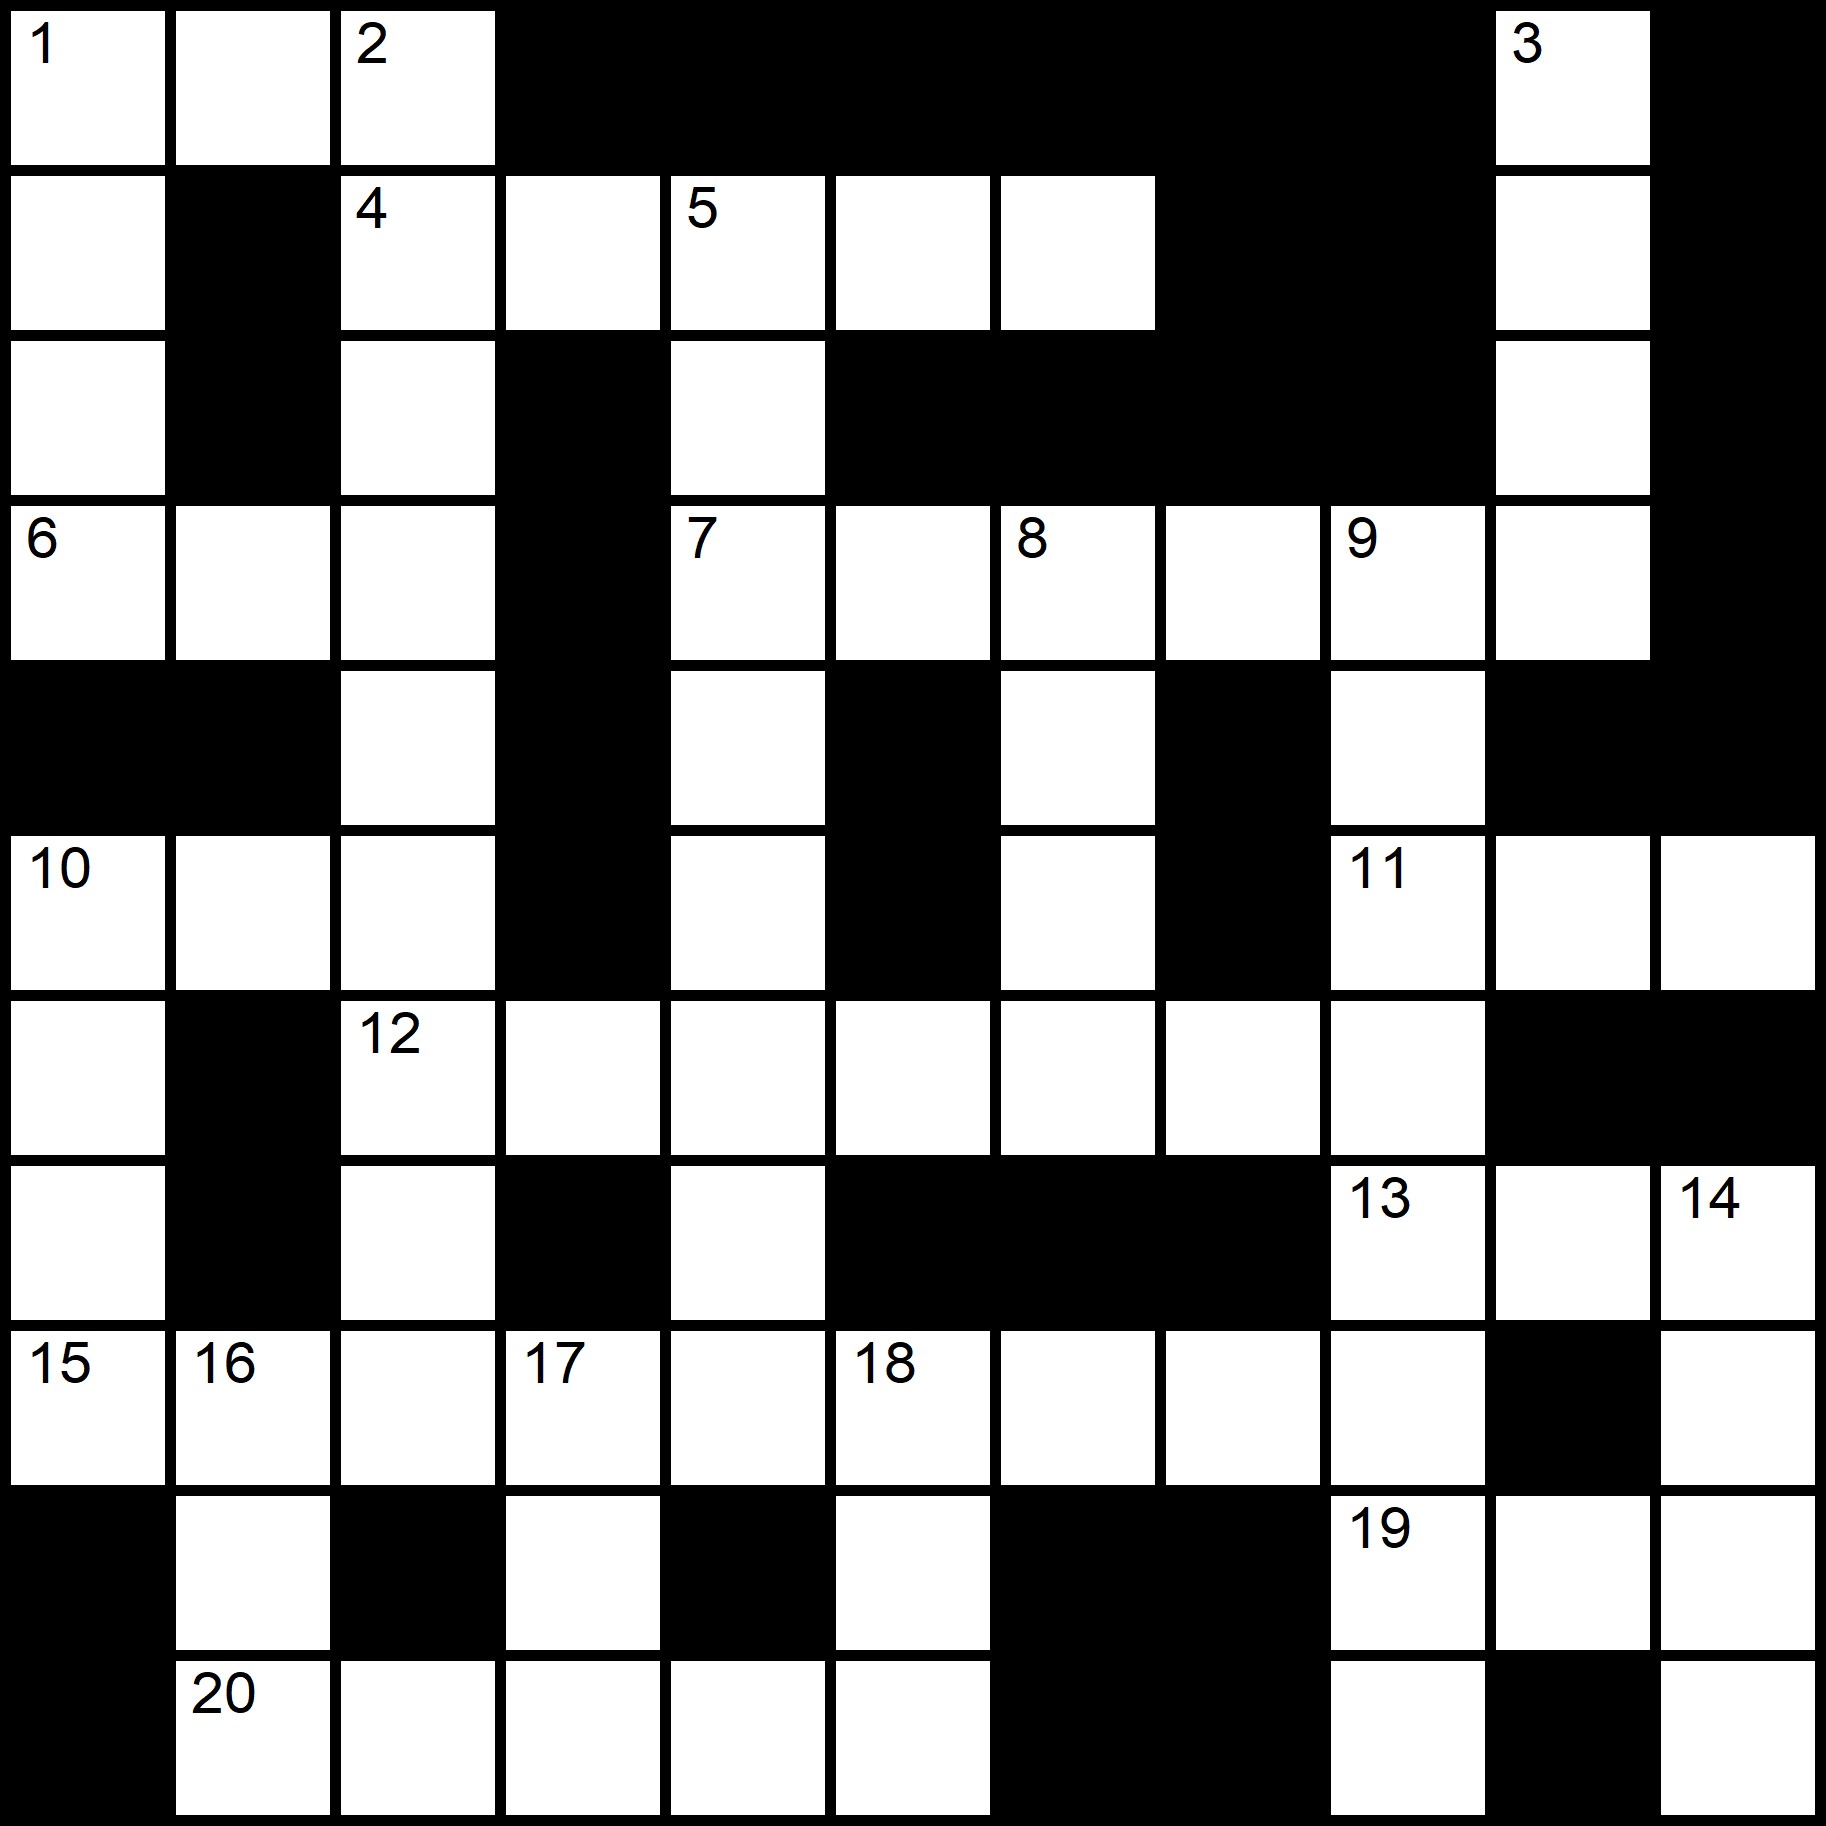 Easy Crossword Puzzles  -
Placidus Flora - Crossword number six